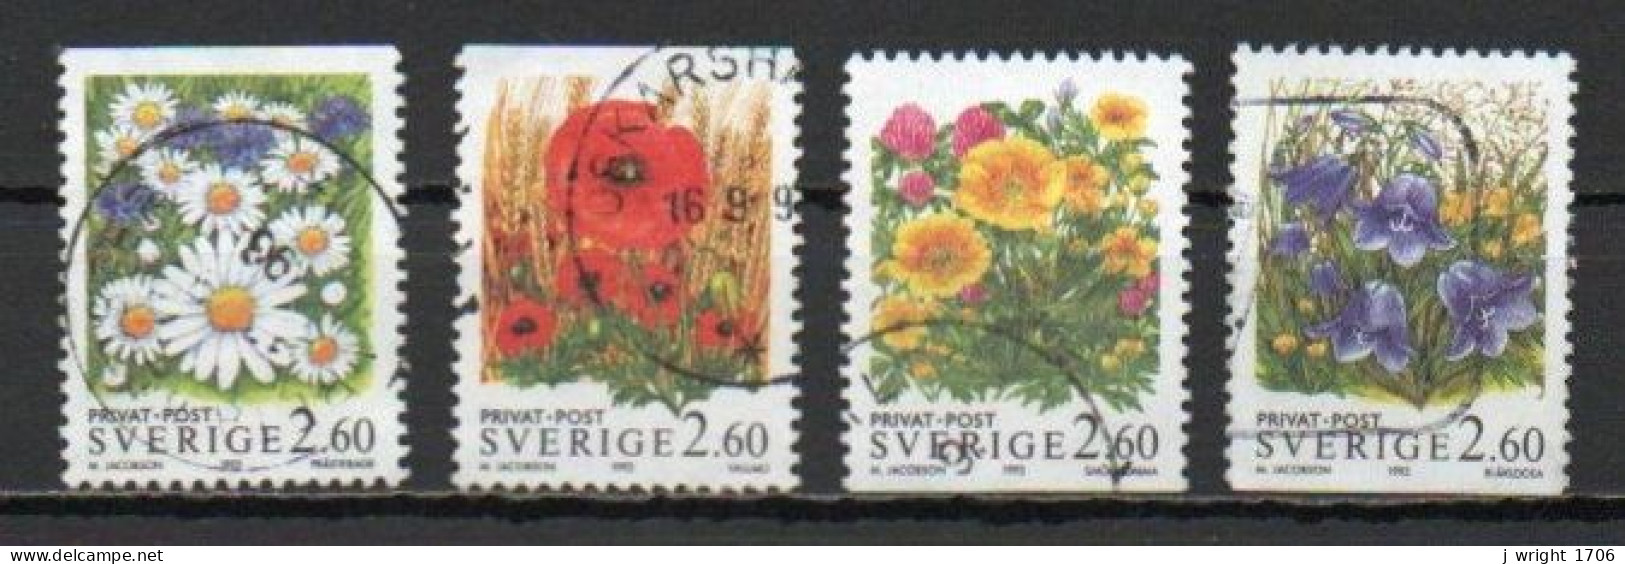 Sweden, 1993, Rebate Stamps/Flowers, Set, USED - Used Stamps